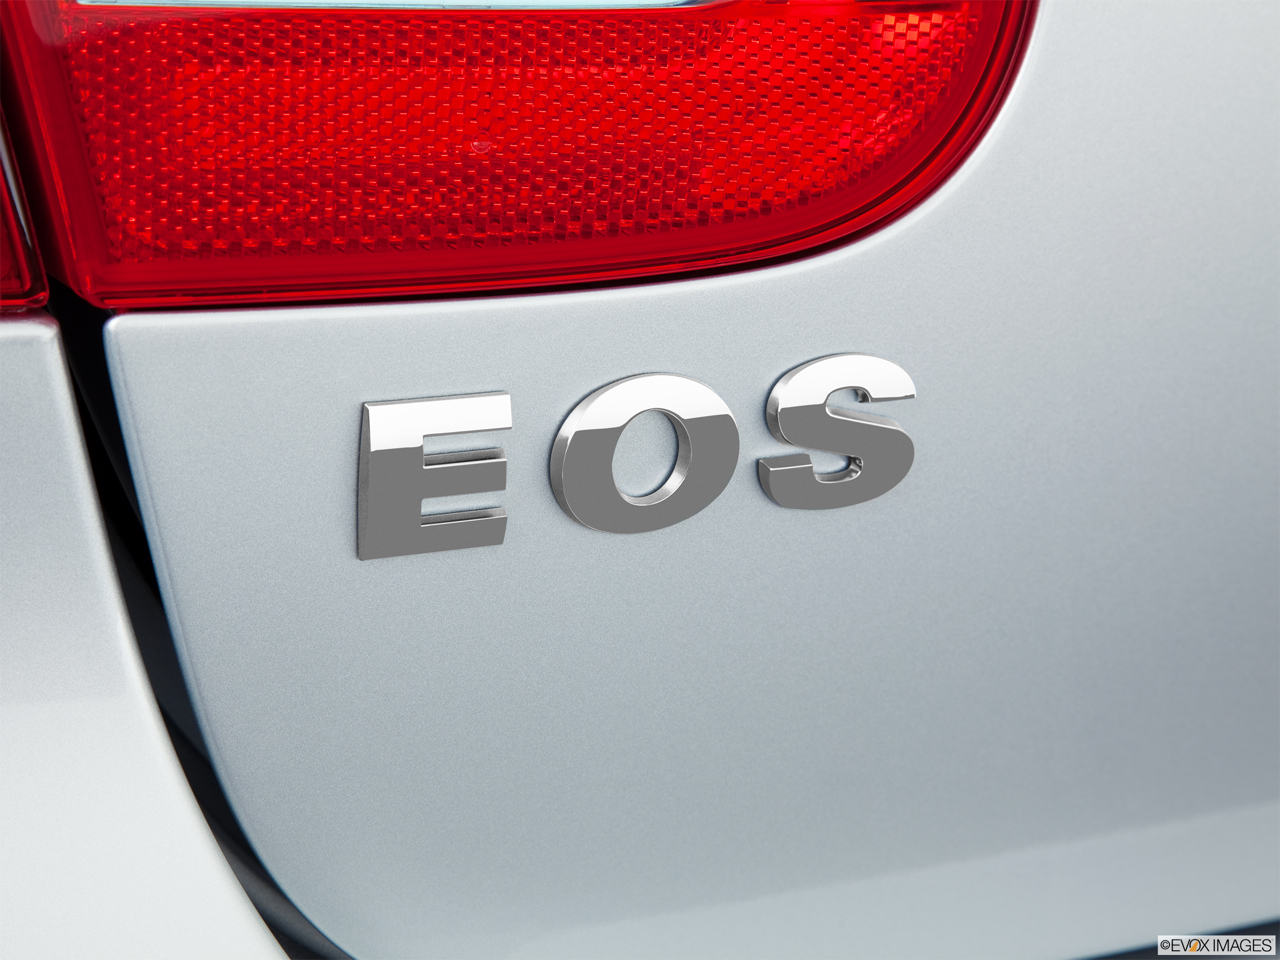 2011 Volkswagen Eos Lux Rear model badge/emblem 